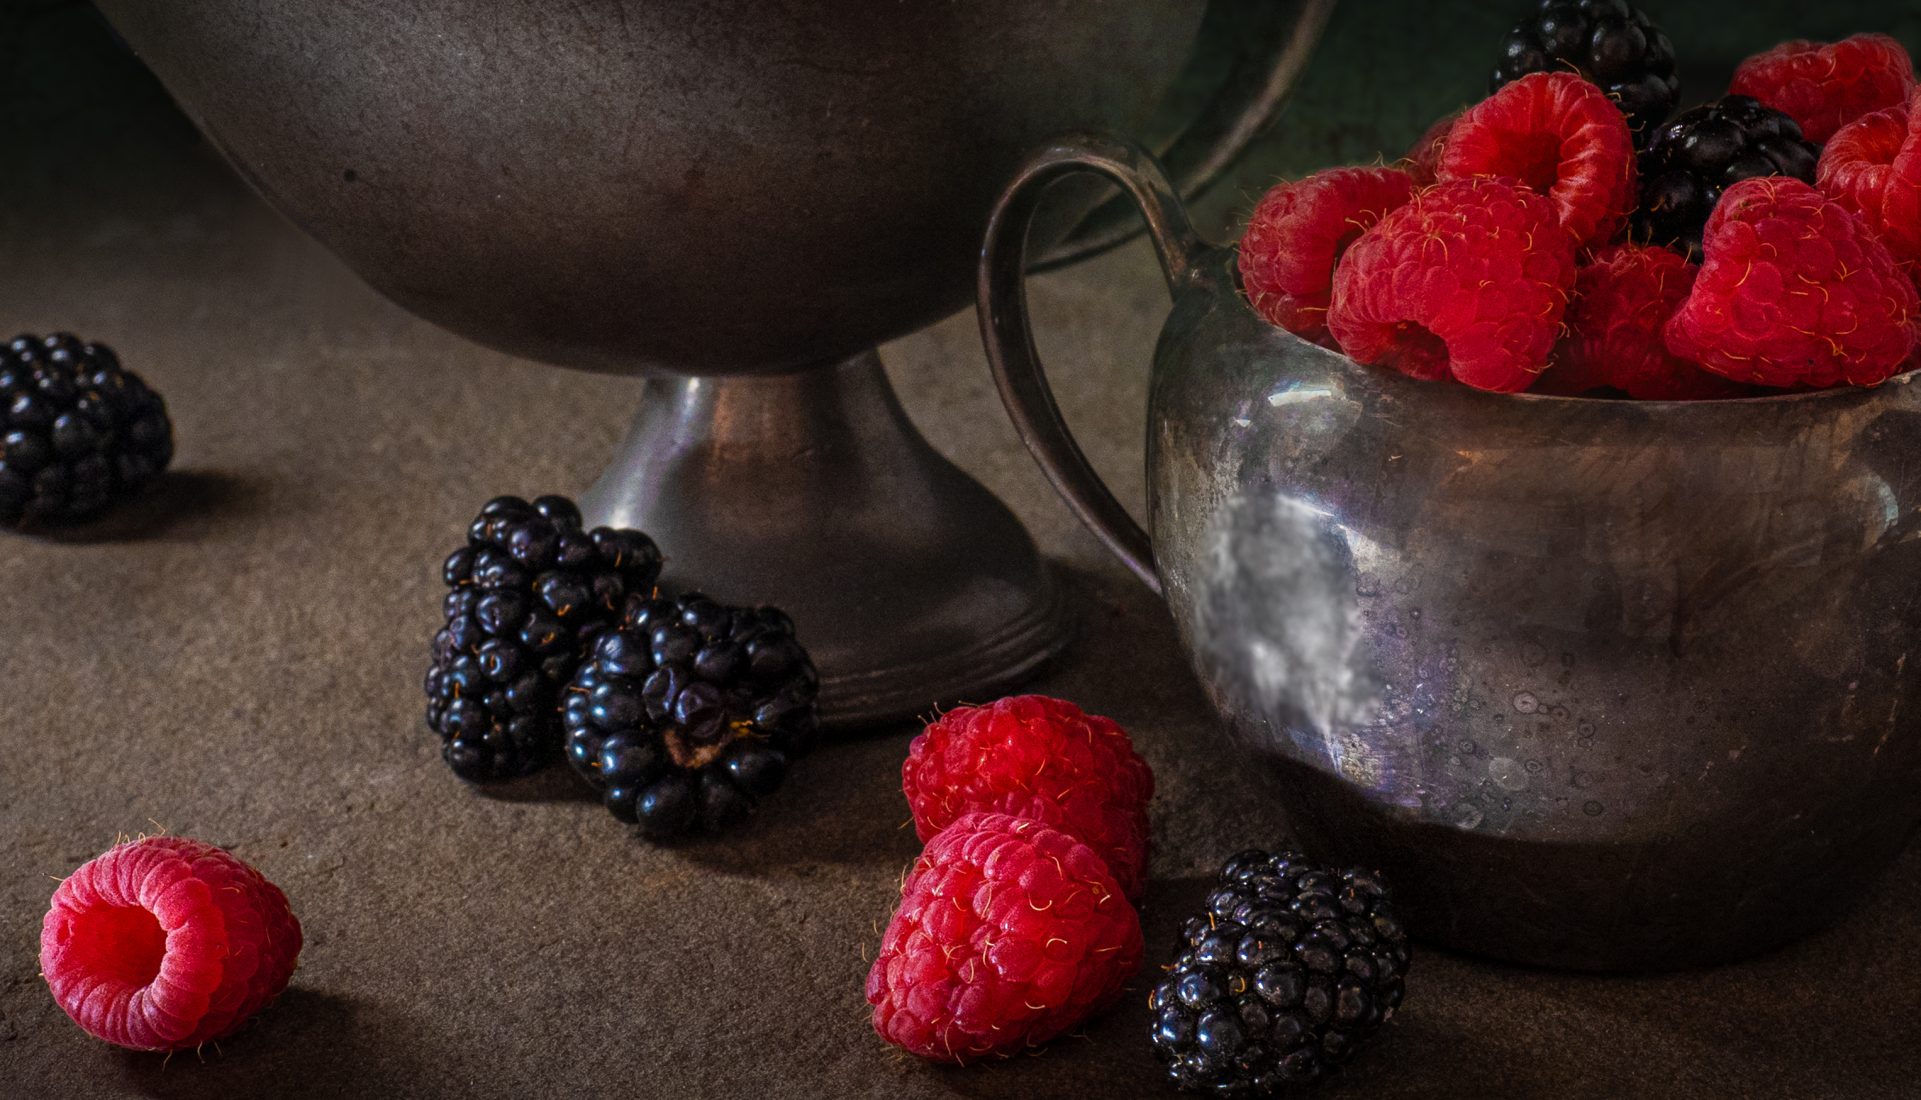 Raspberries and Blackberries – a still life